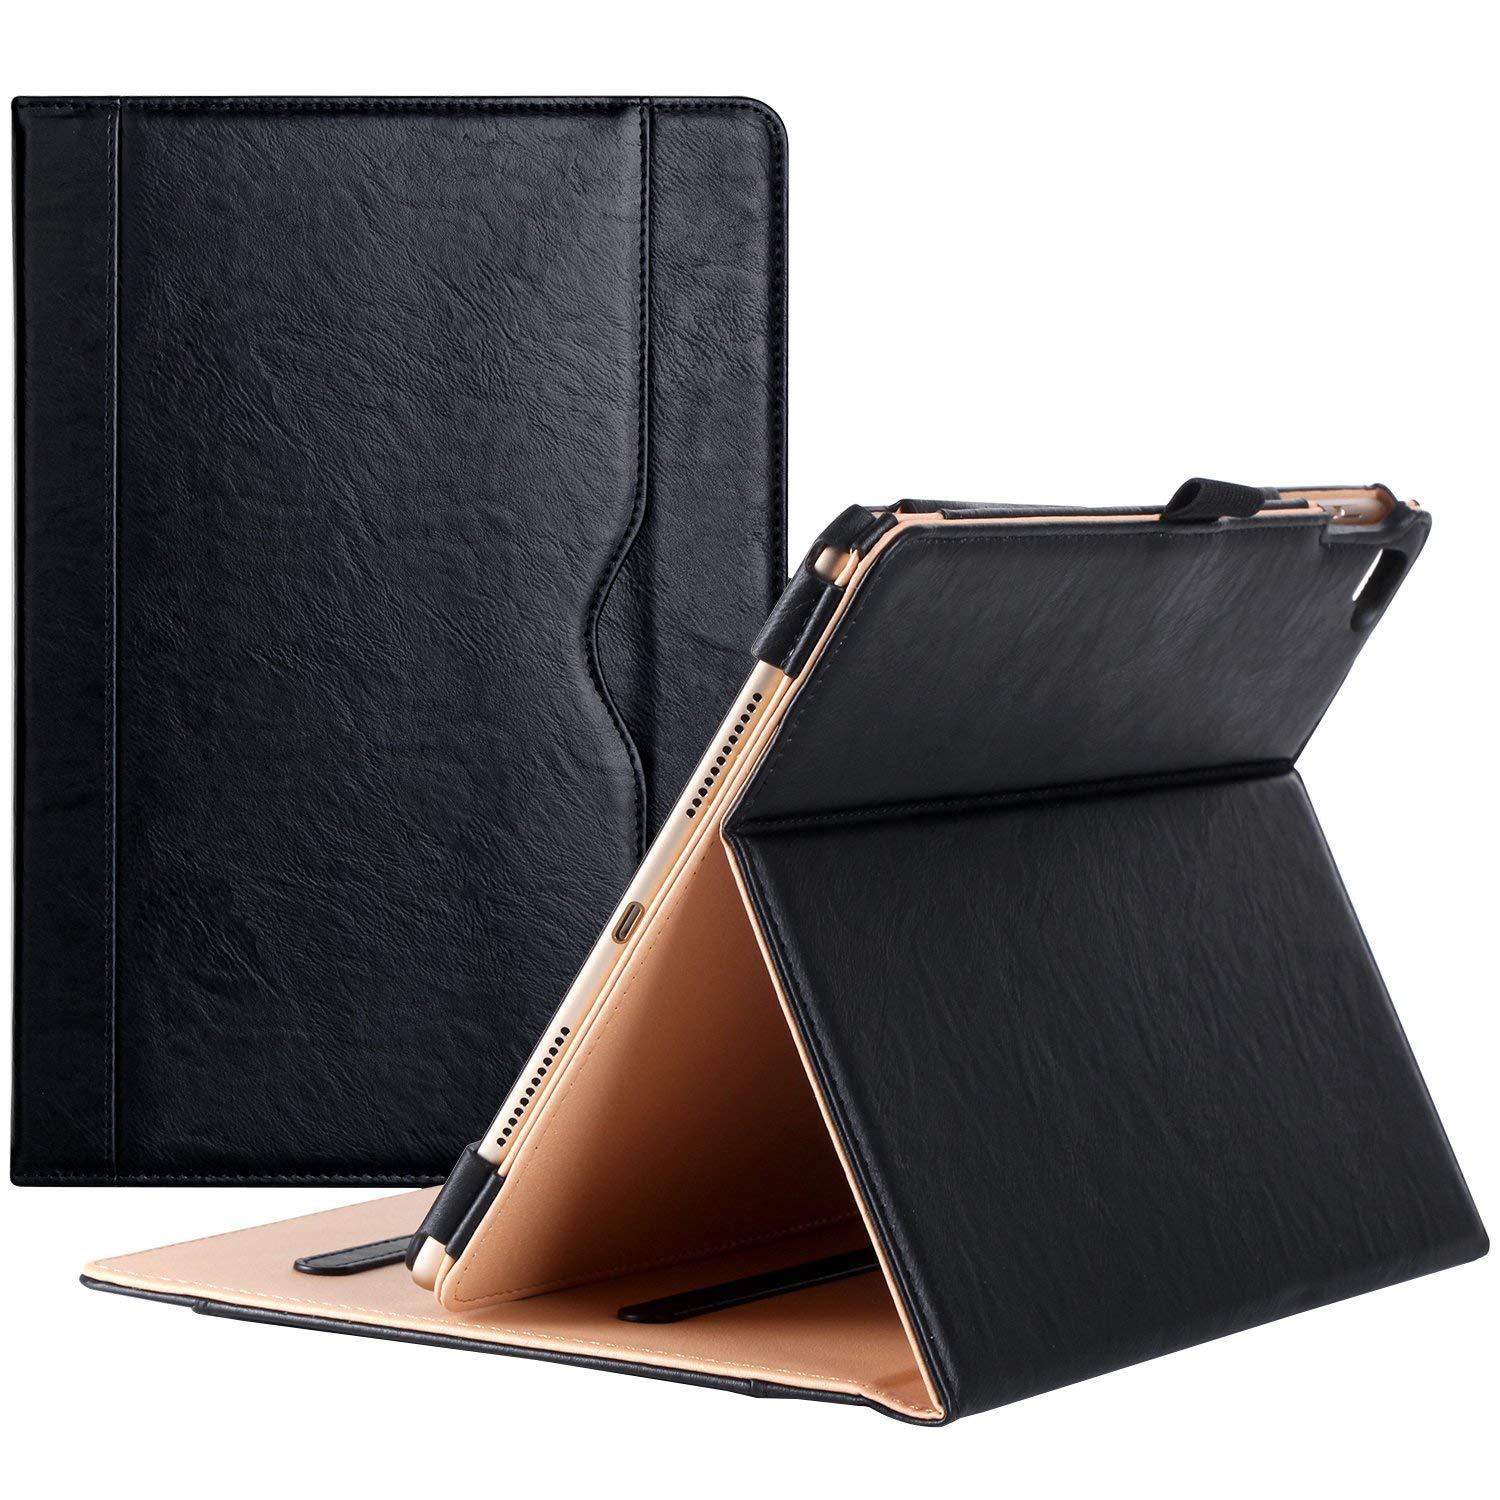 iPad Pro 9.7 2016 Leather Folio Case